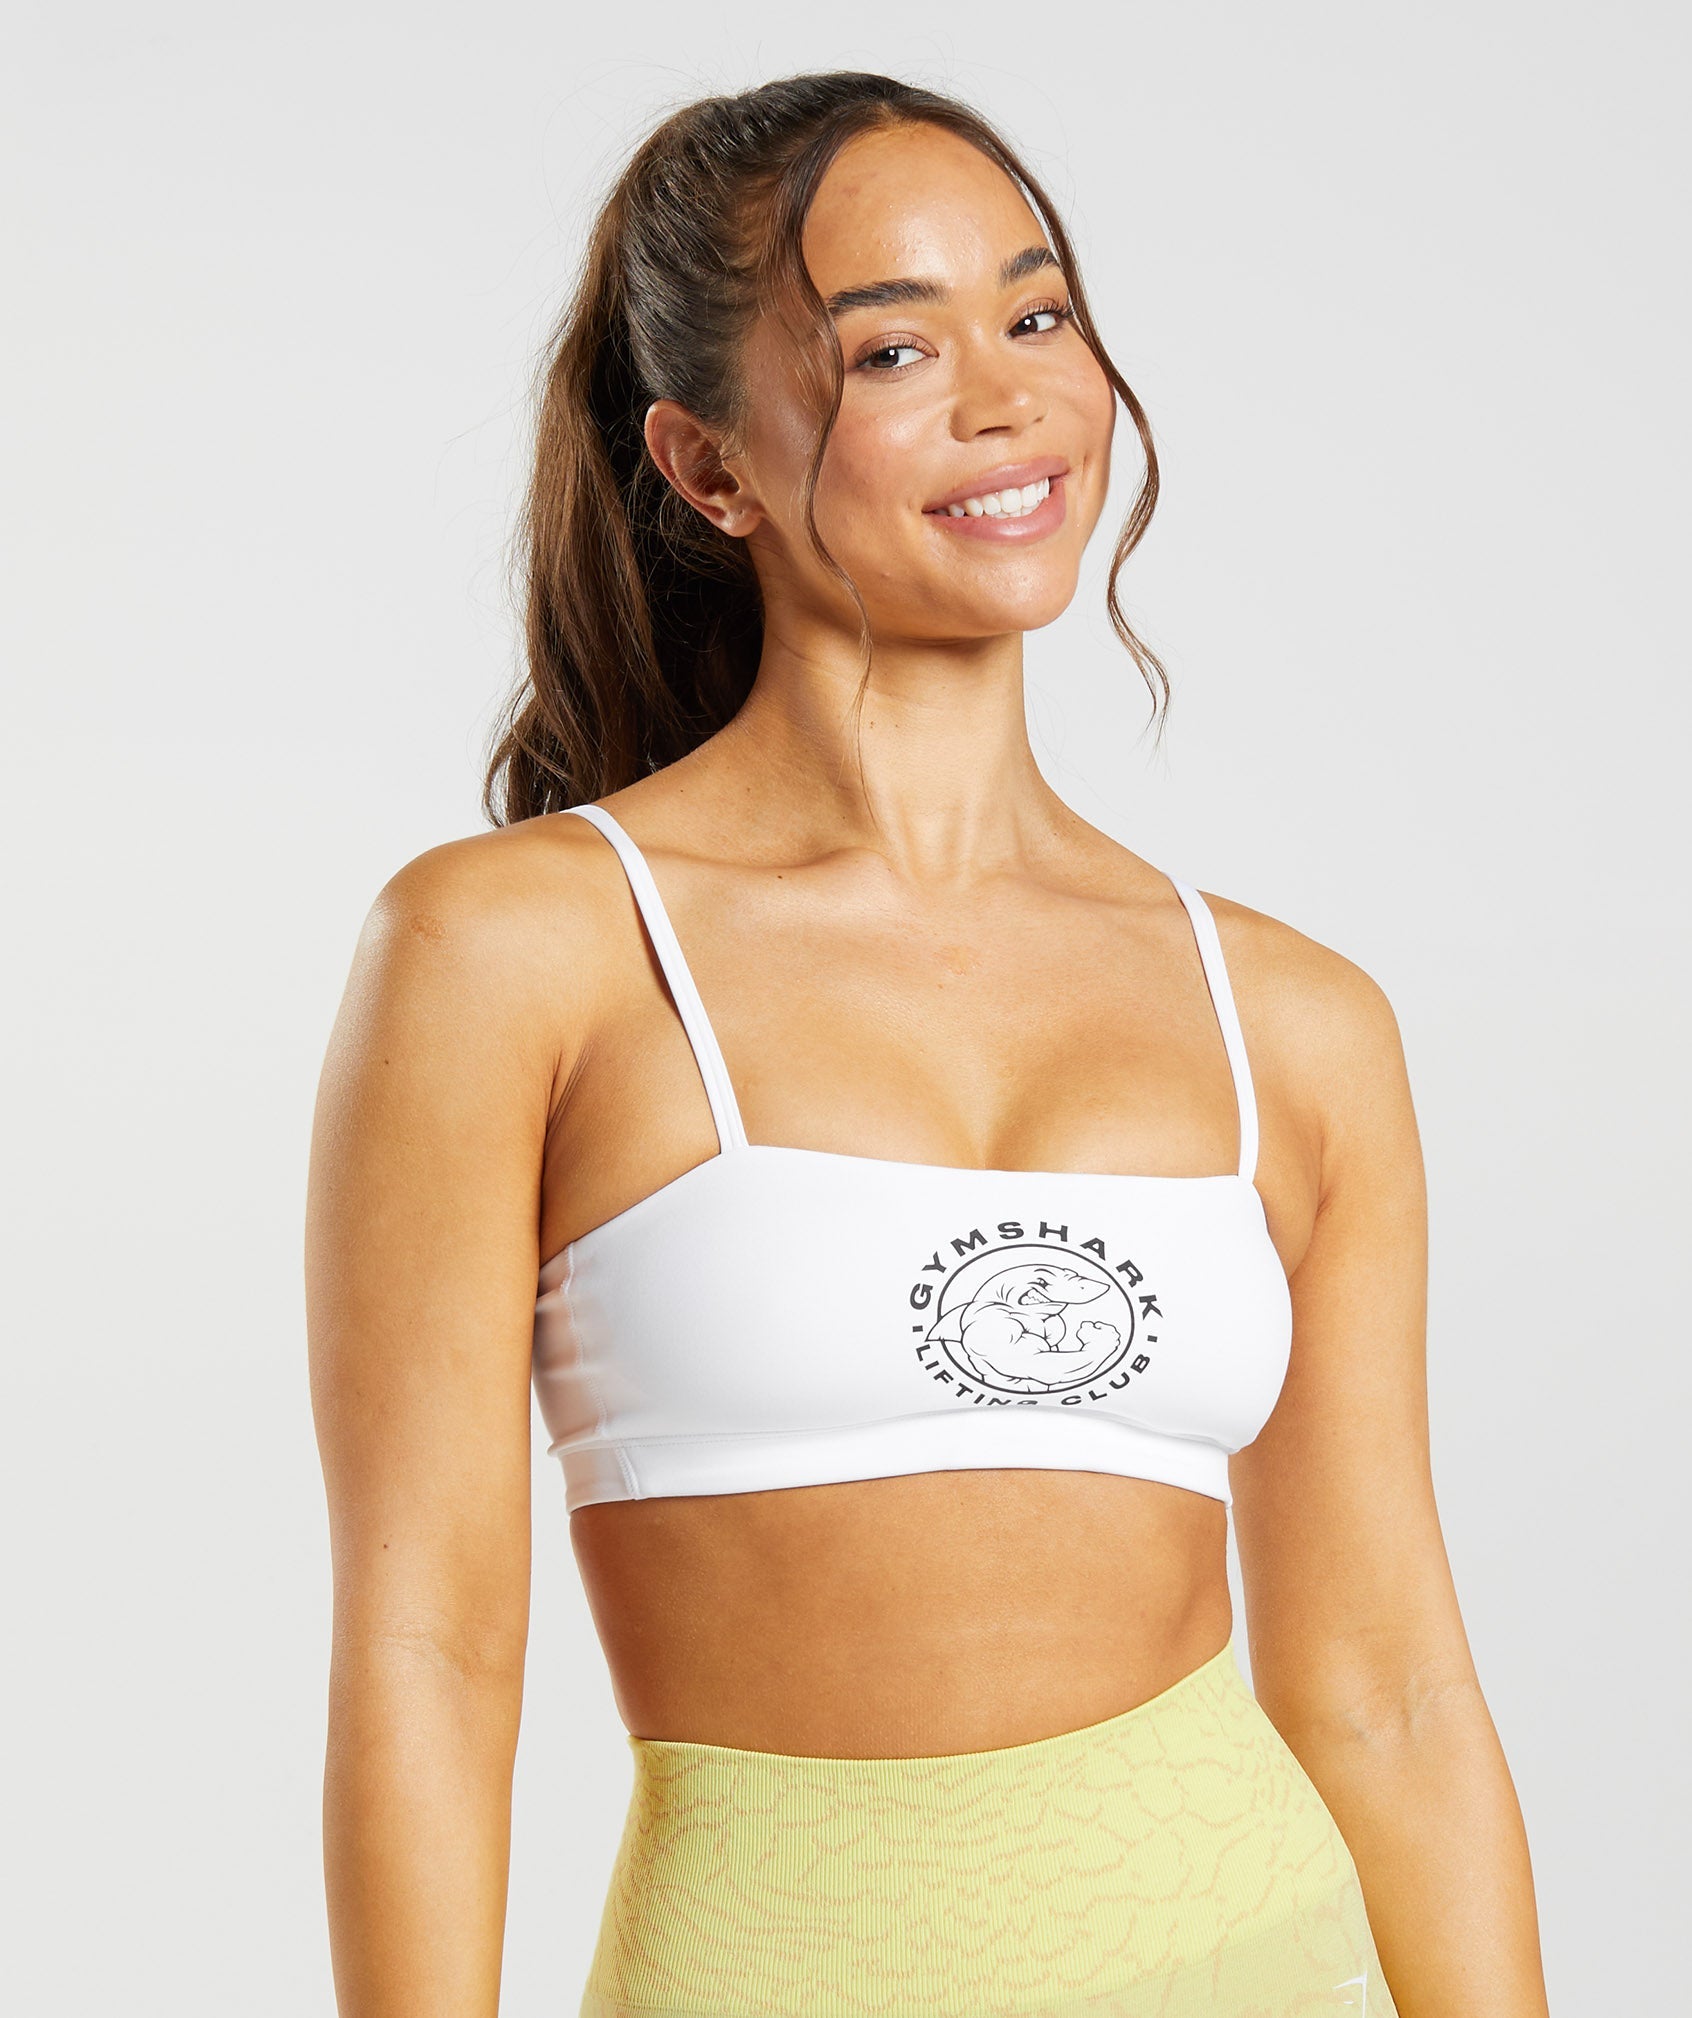 Gymshark white sports bra. Medium/high support. - Depop